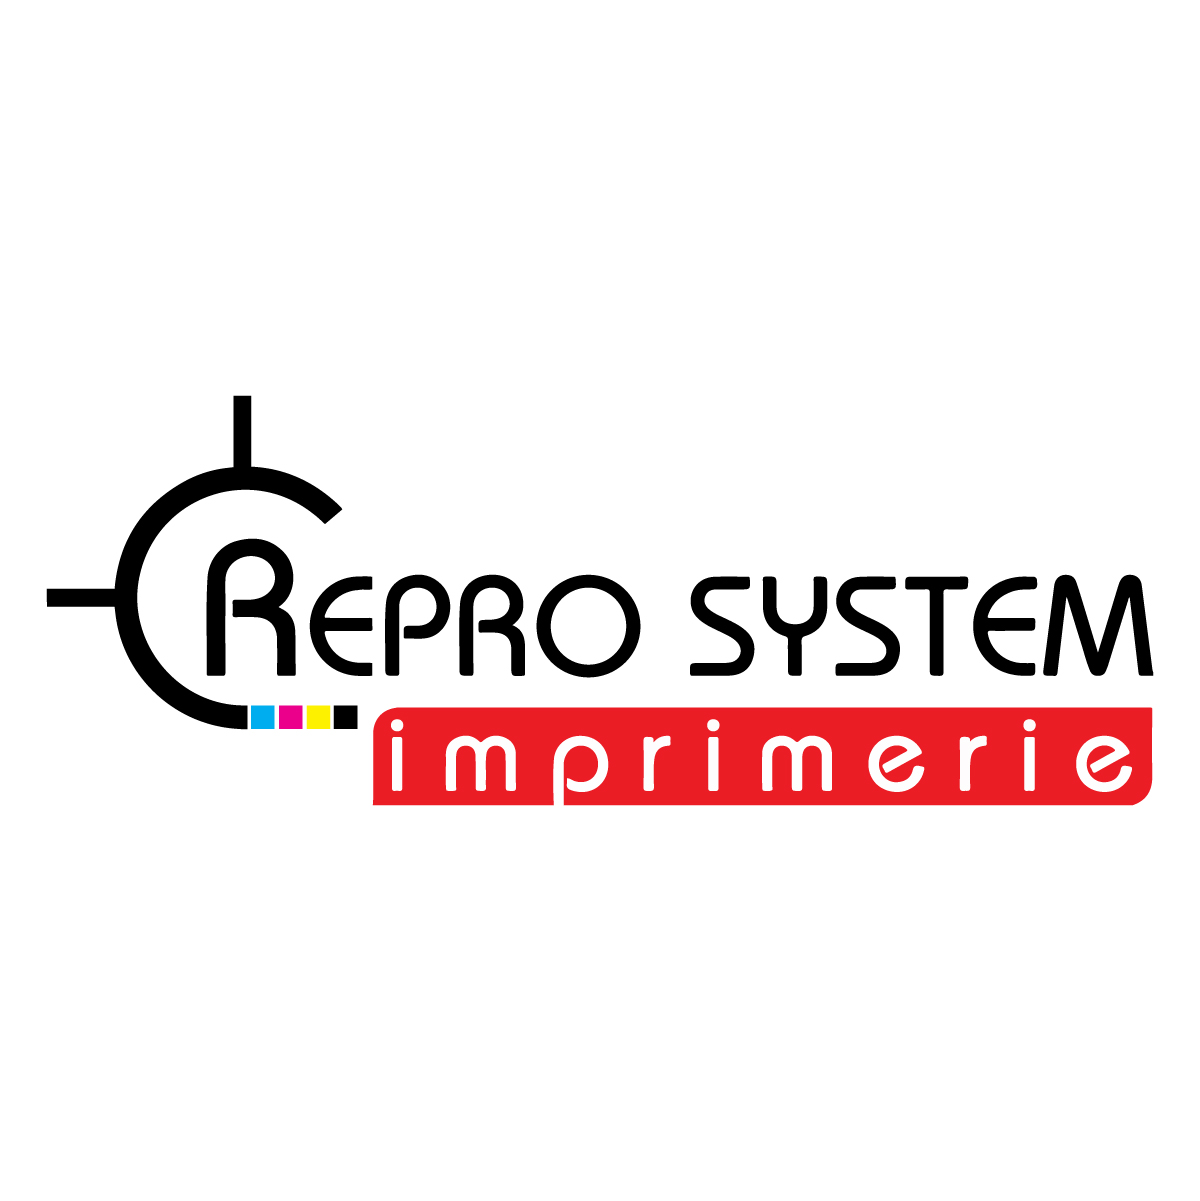 (c) Imprimerie-reprosystem.fr